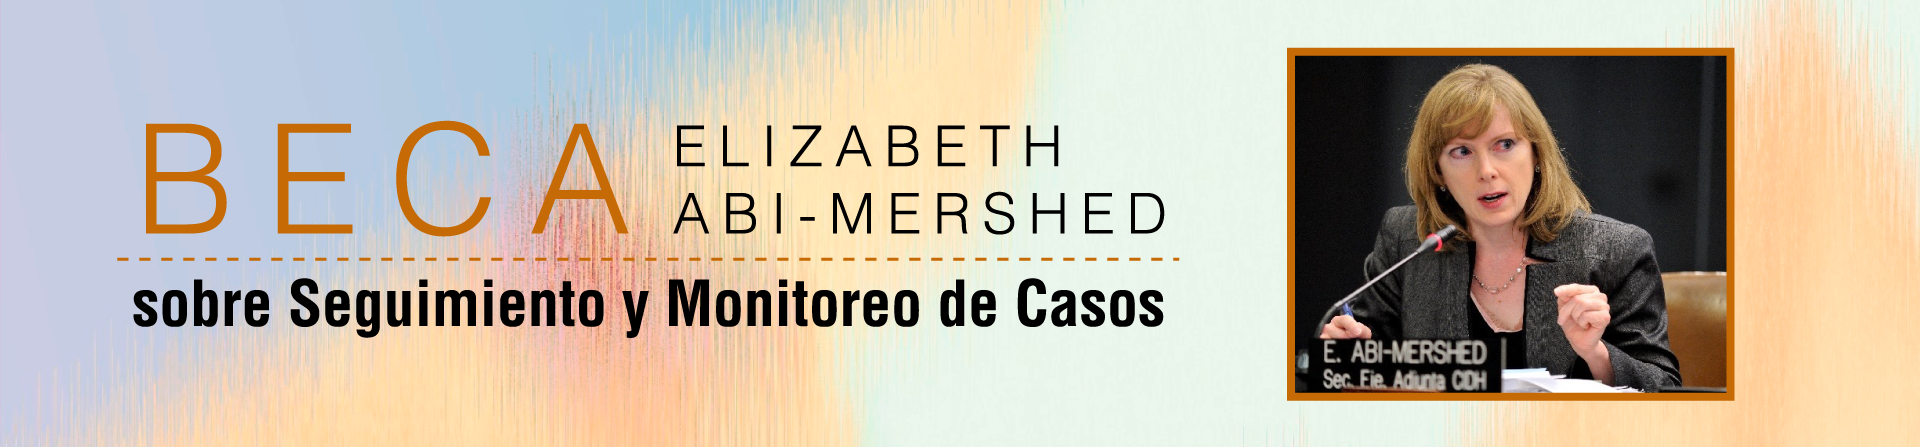 Elizabeth Abi-Mershed